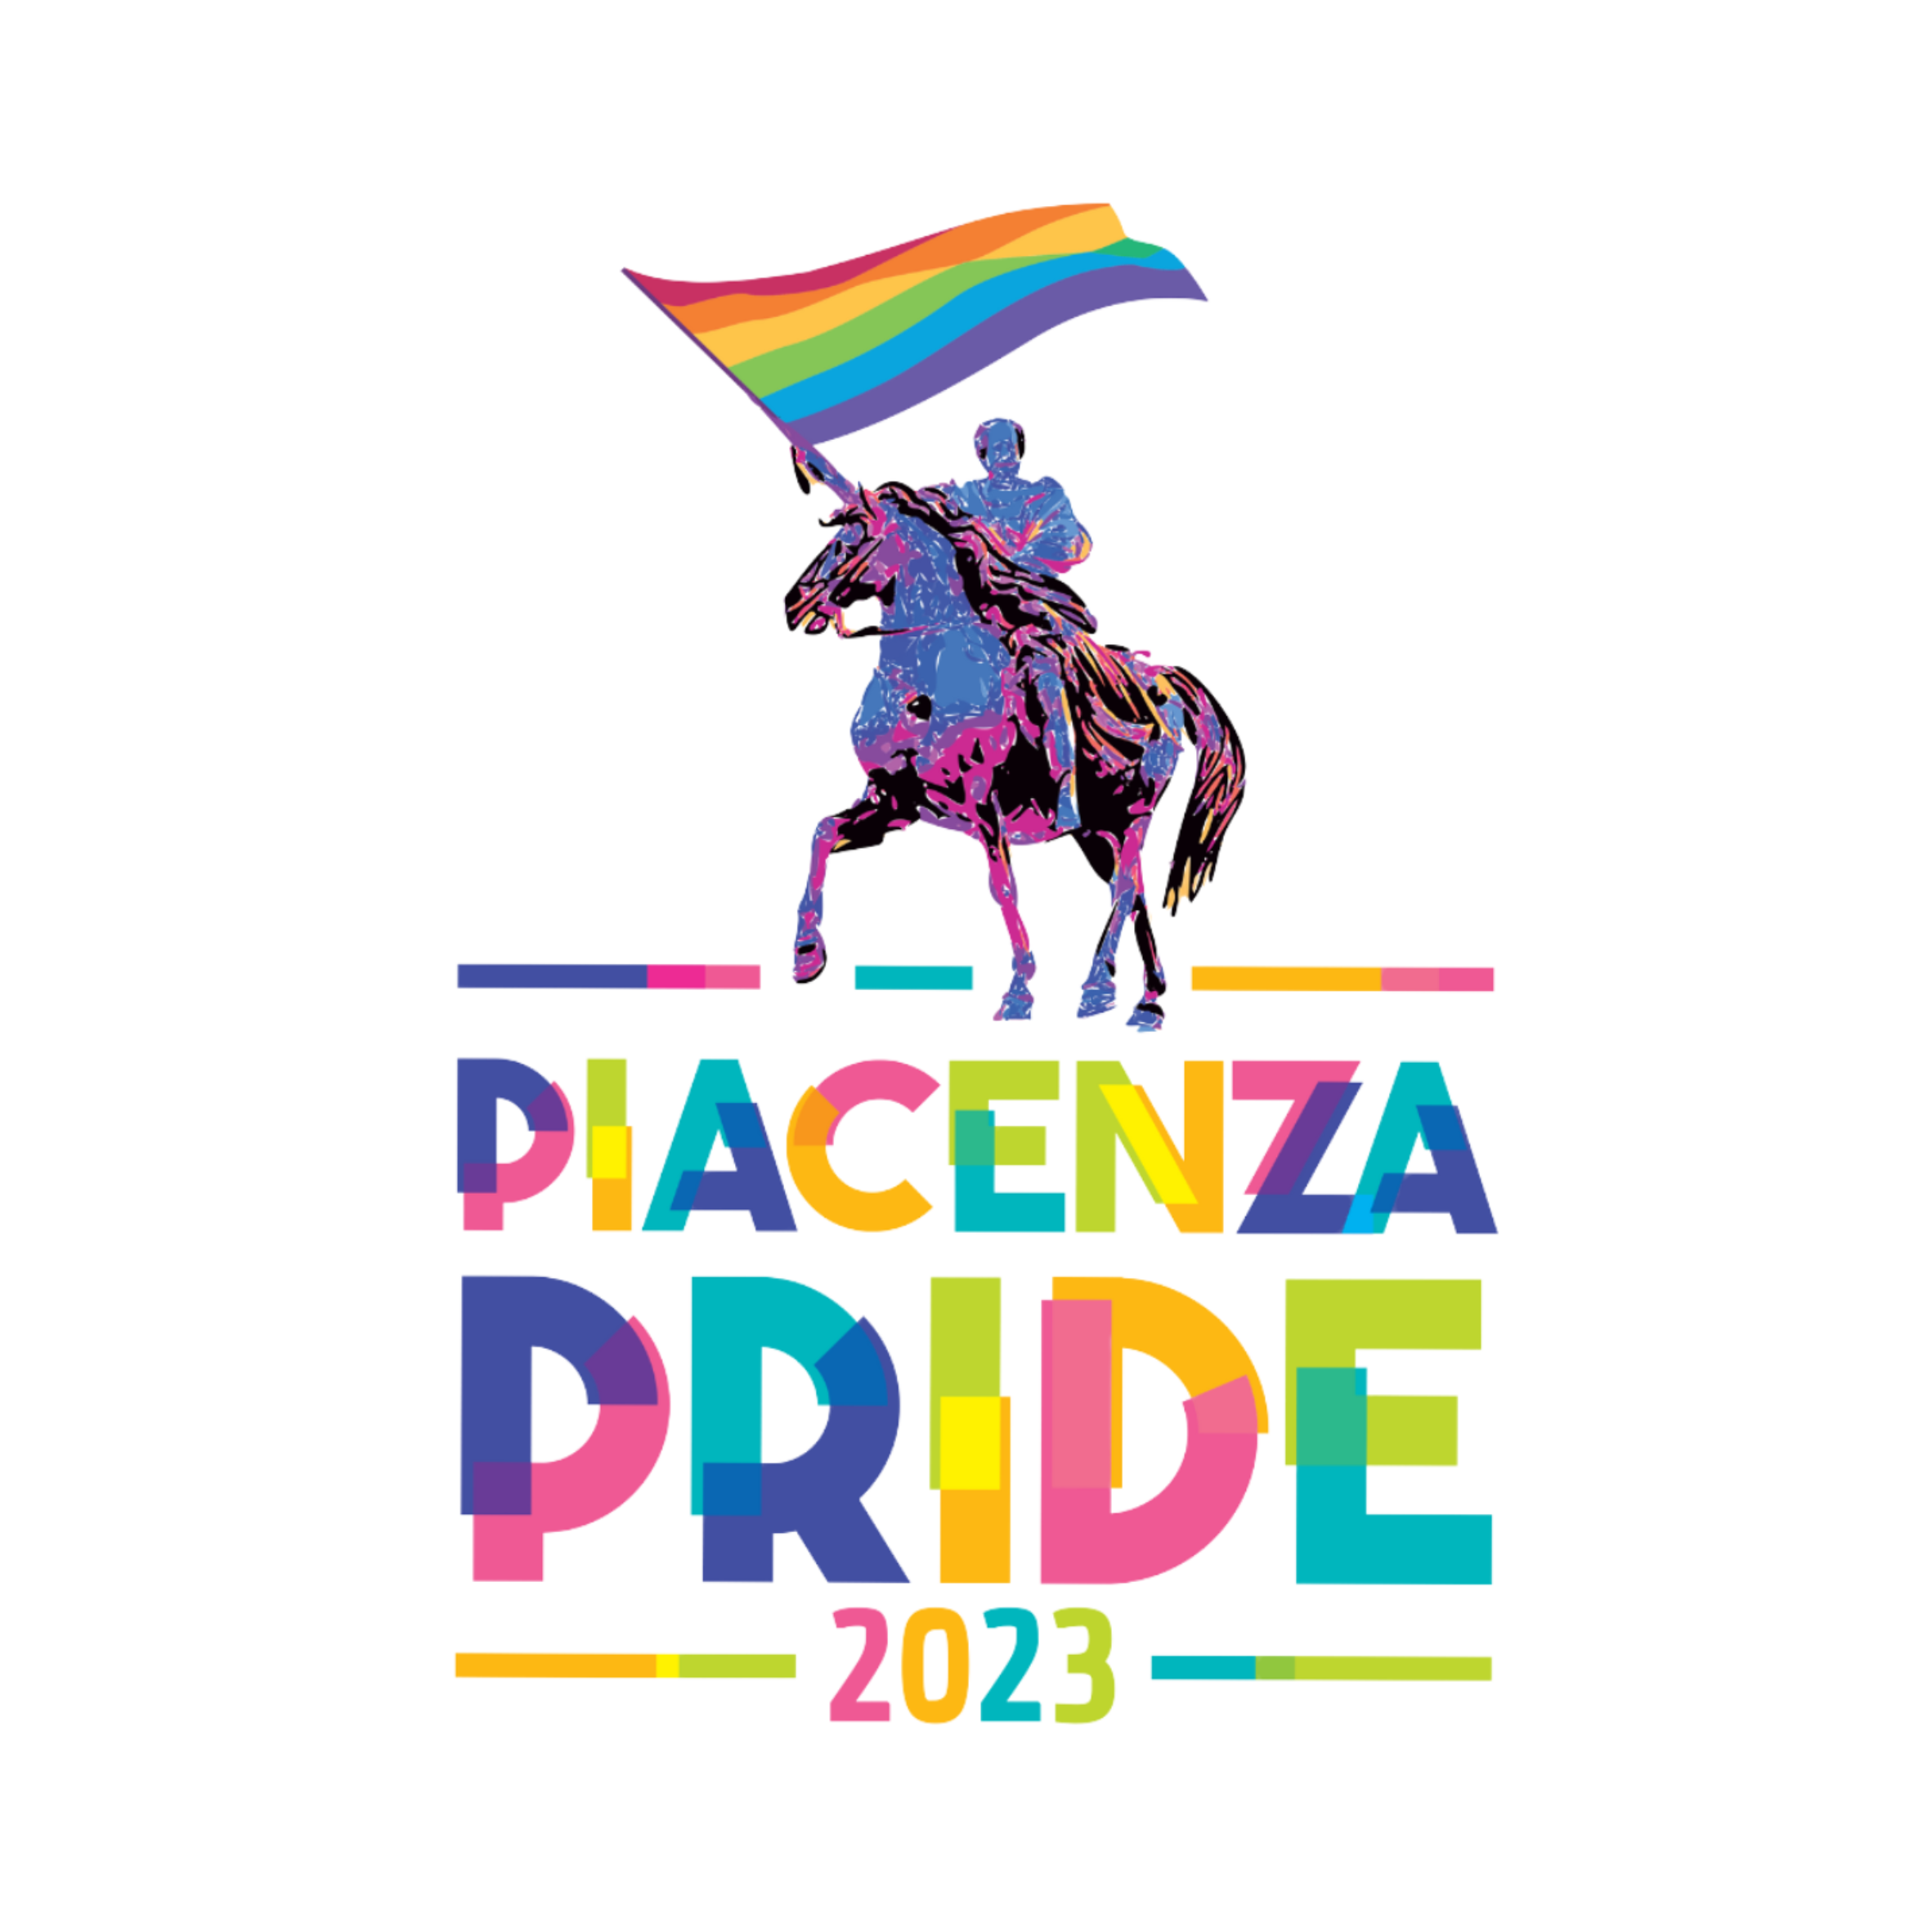 Piacenza Pride 2023